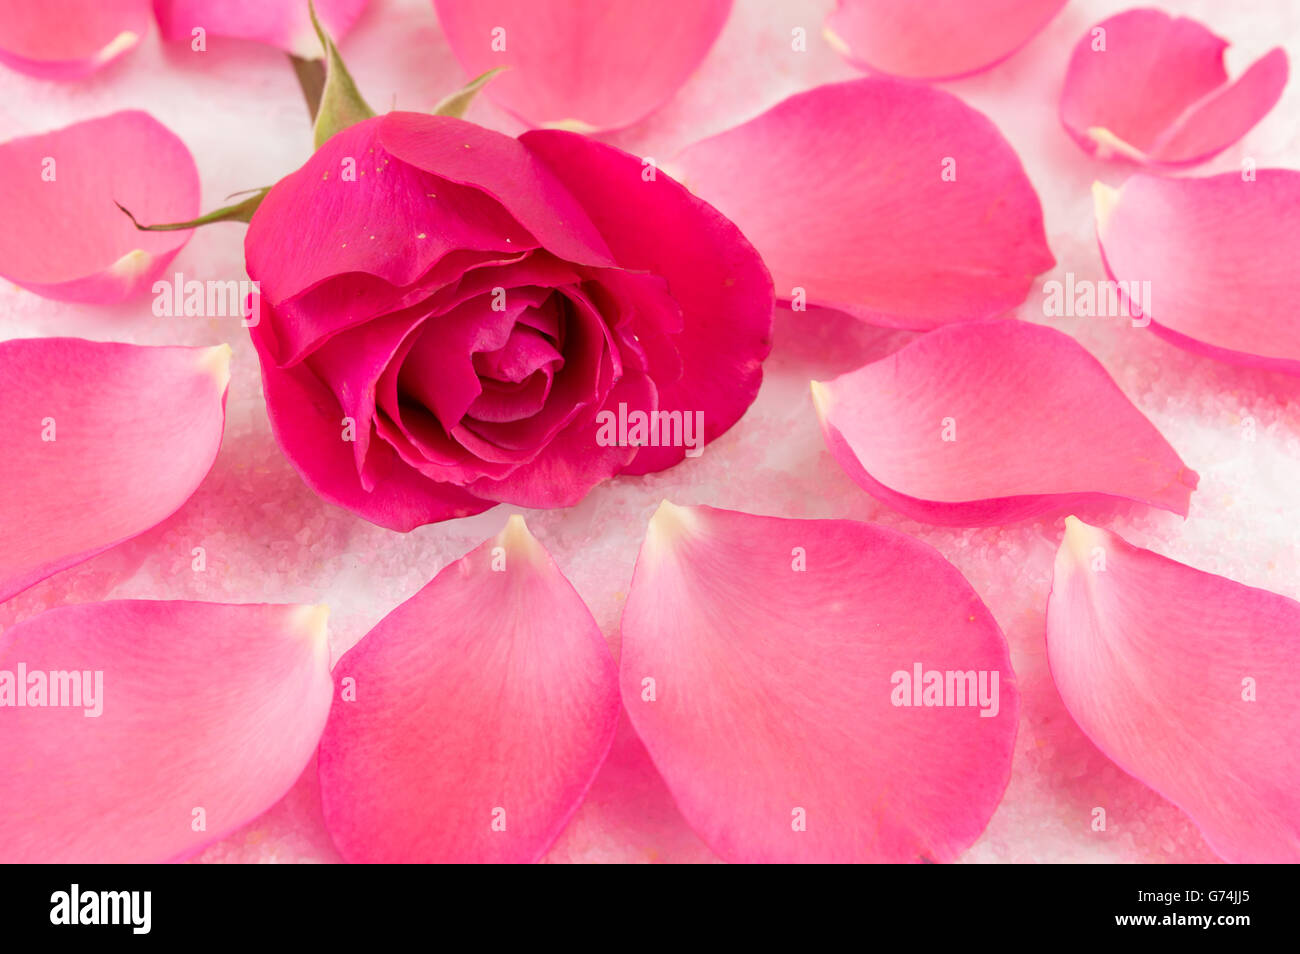 Pink rose on rose petals and bath salt grains Stock Photo